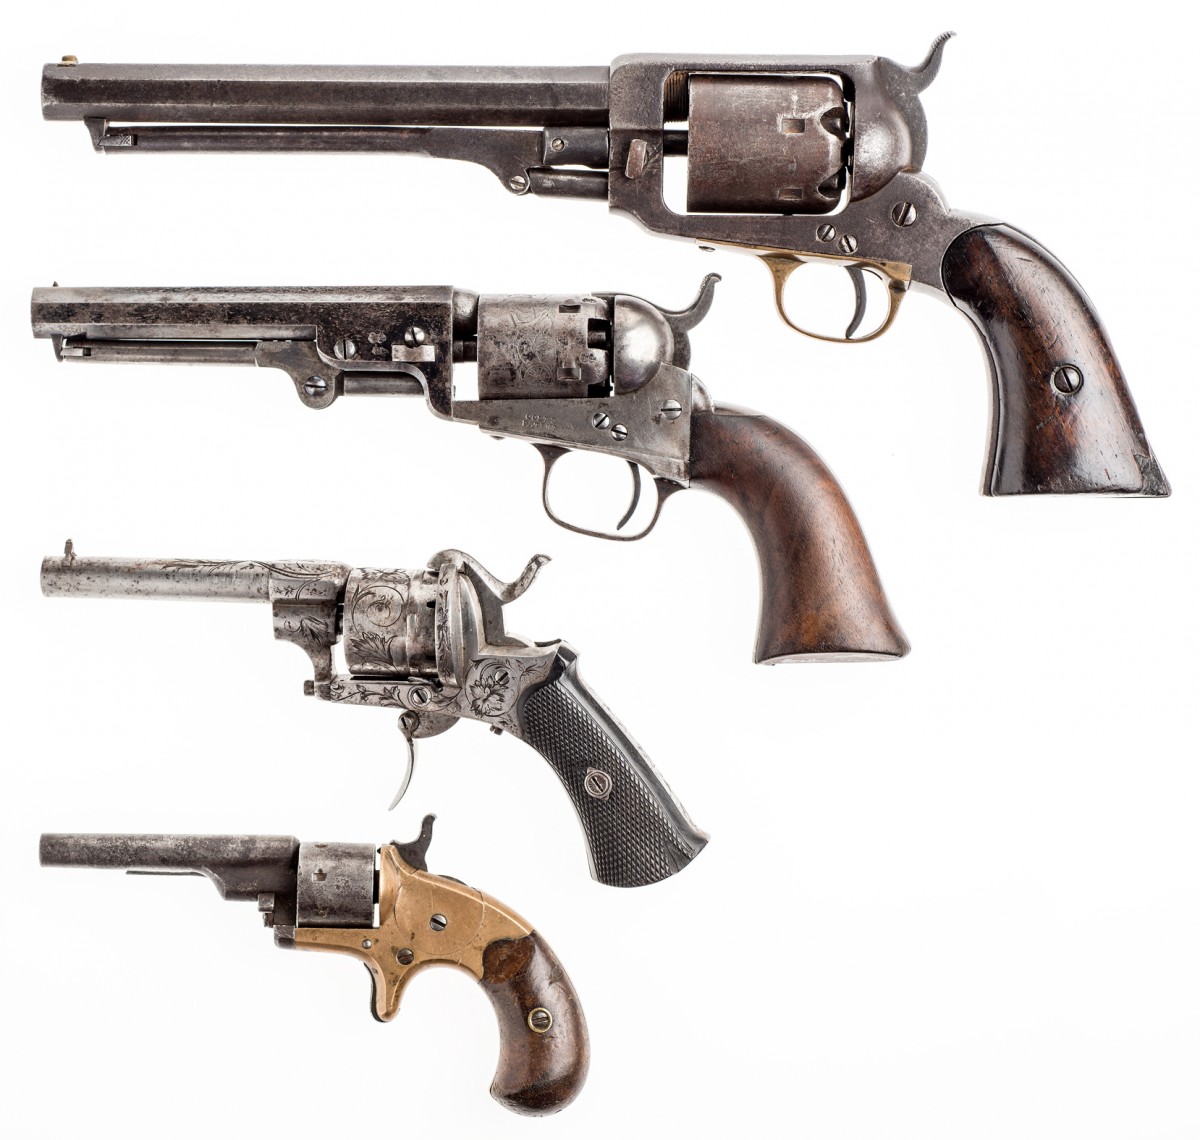 Revolvers Top To Bottom Samuel Colt Colt Whitney Revolver